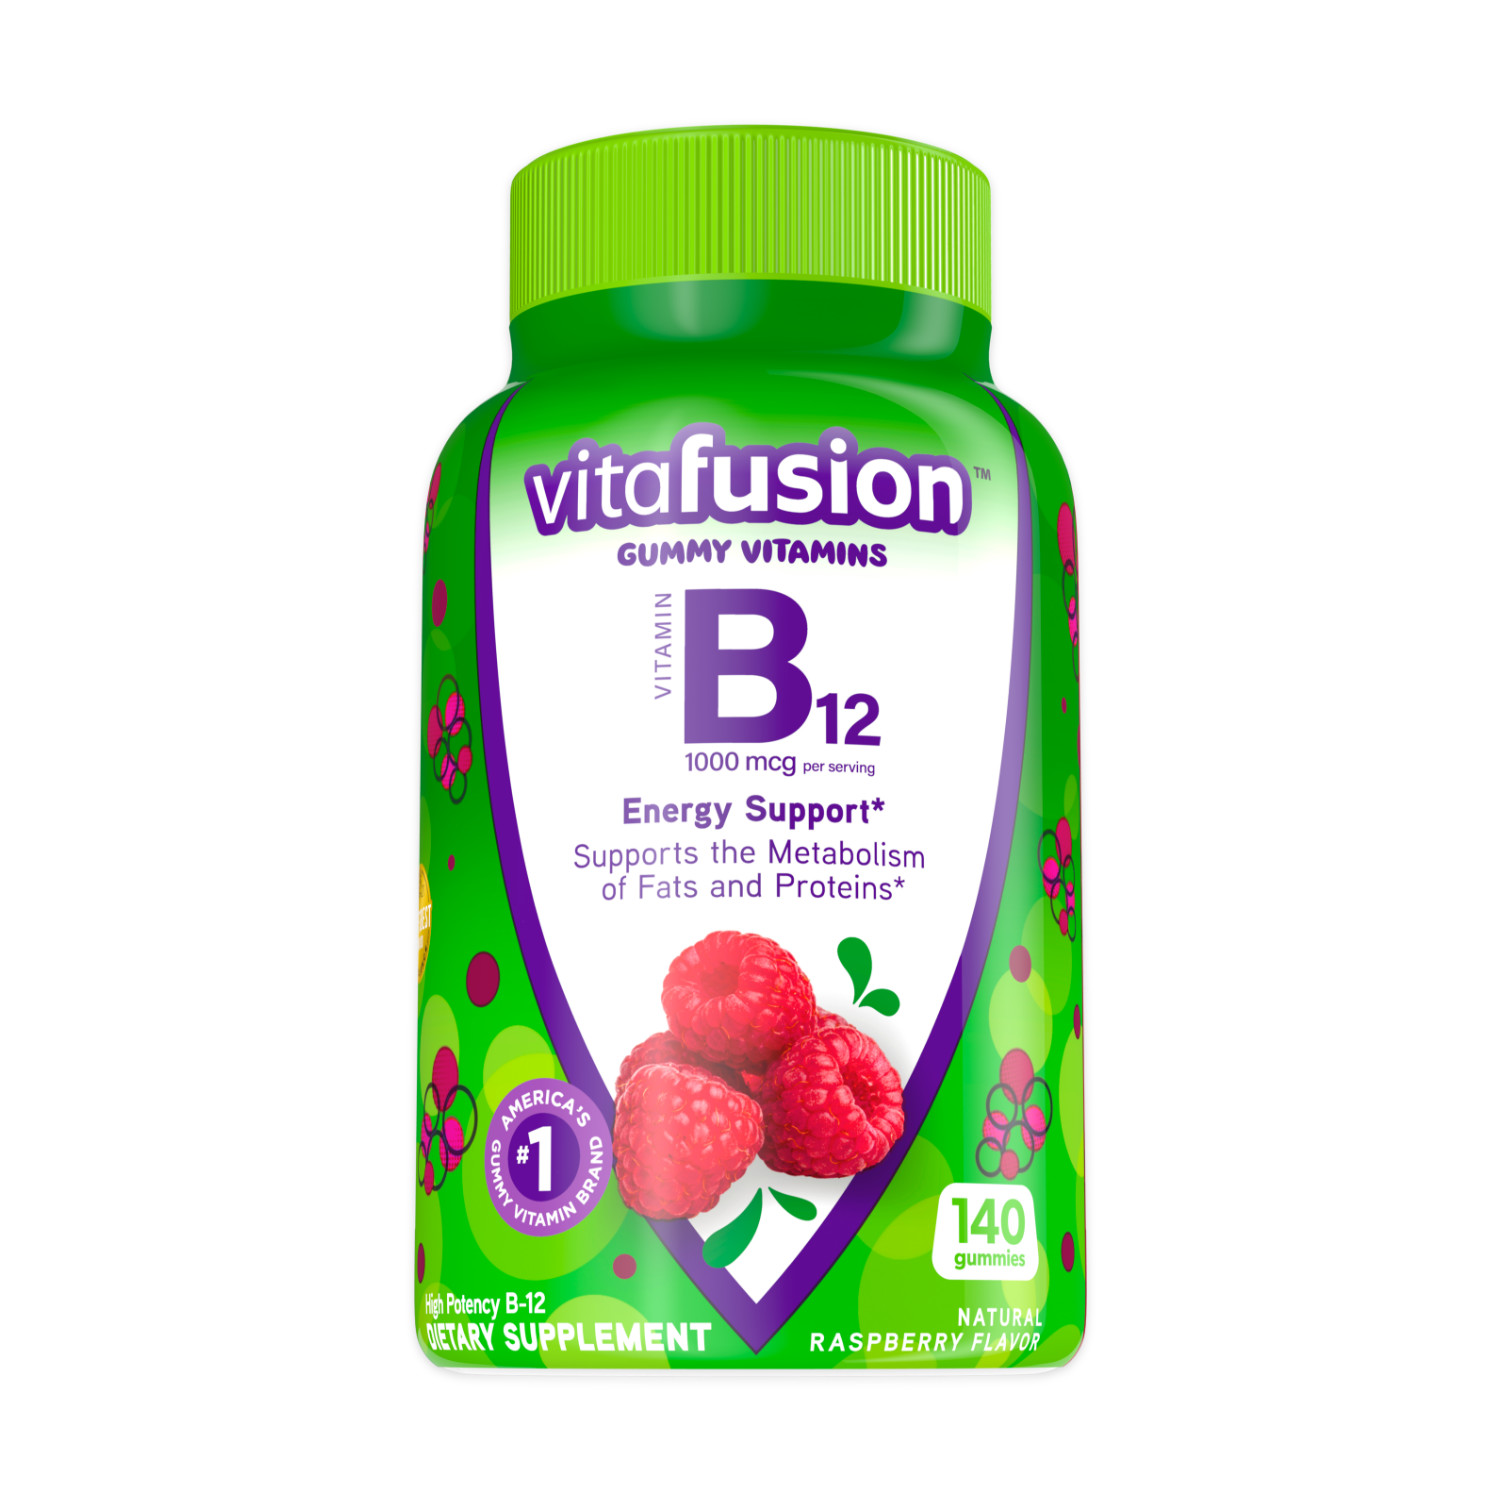 vitafusion Vitamin B12 Gummy Vitamins, Raspberry Flavored, 140 Count - image 1 of 8